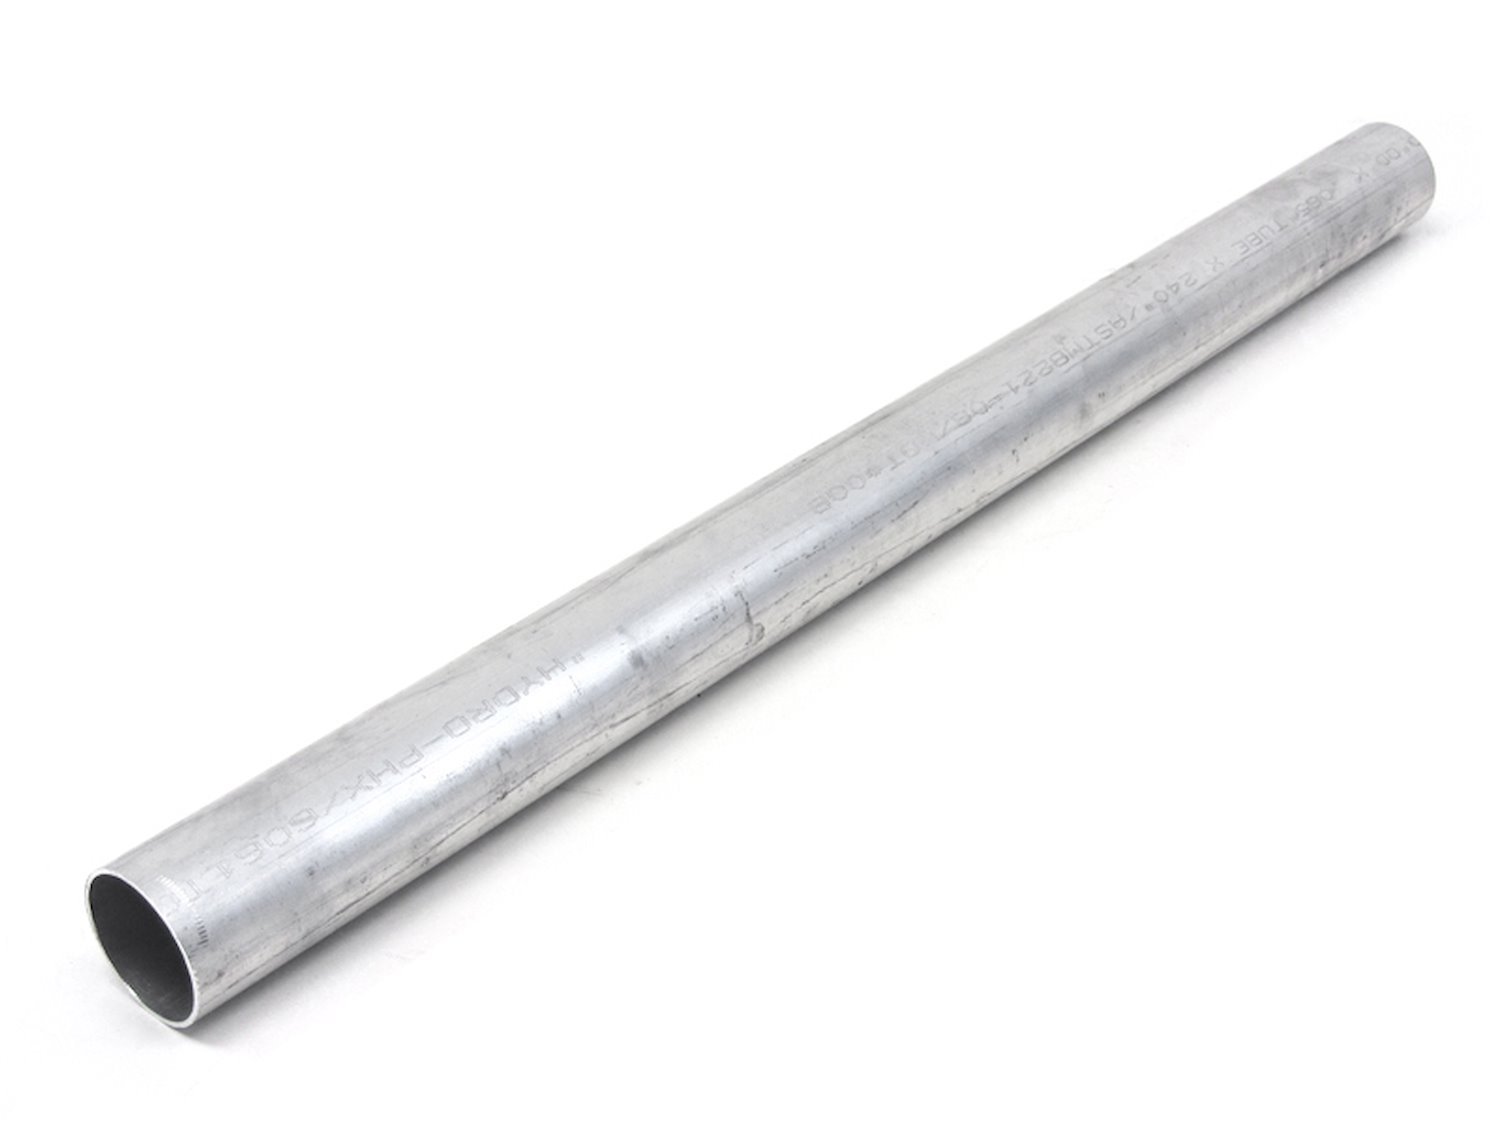 AST-025 Aluminum Tubing, 6061 Aluminum, Straight Tubing, 1/4 in. OD, Seamless, Raw Finish, 1 ft. Long